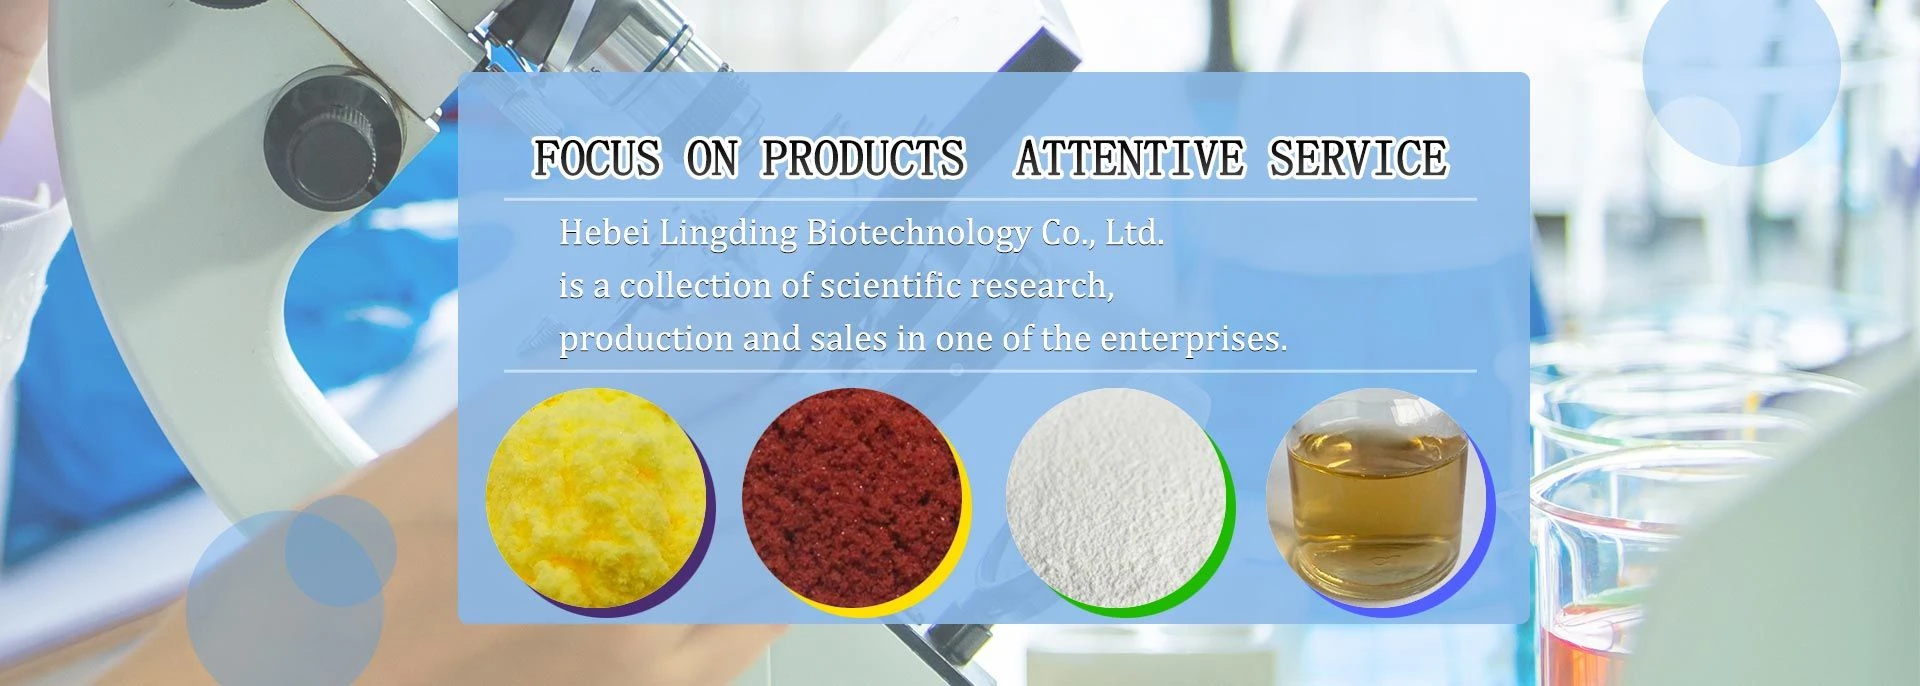 Hebei Lingding Biotechnology Co., Ltd.